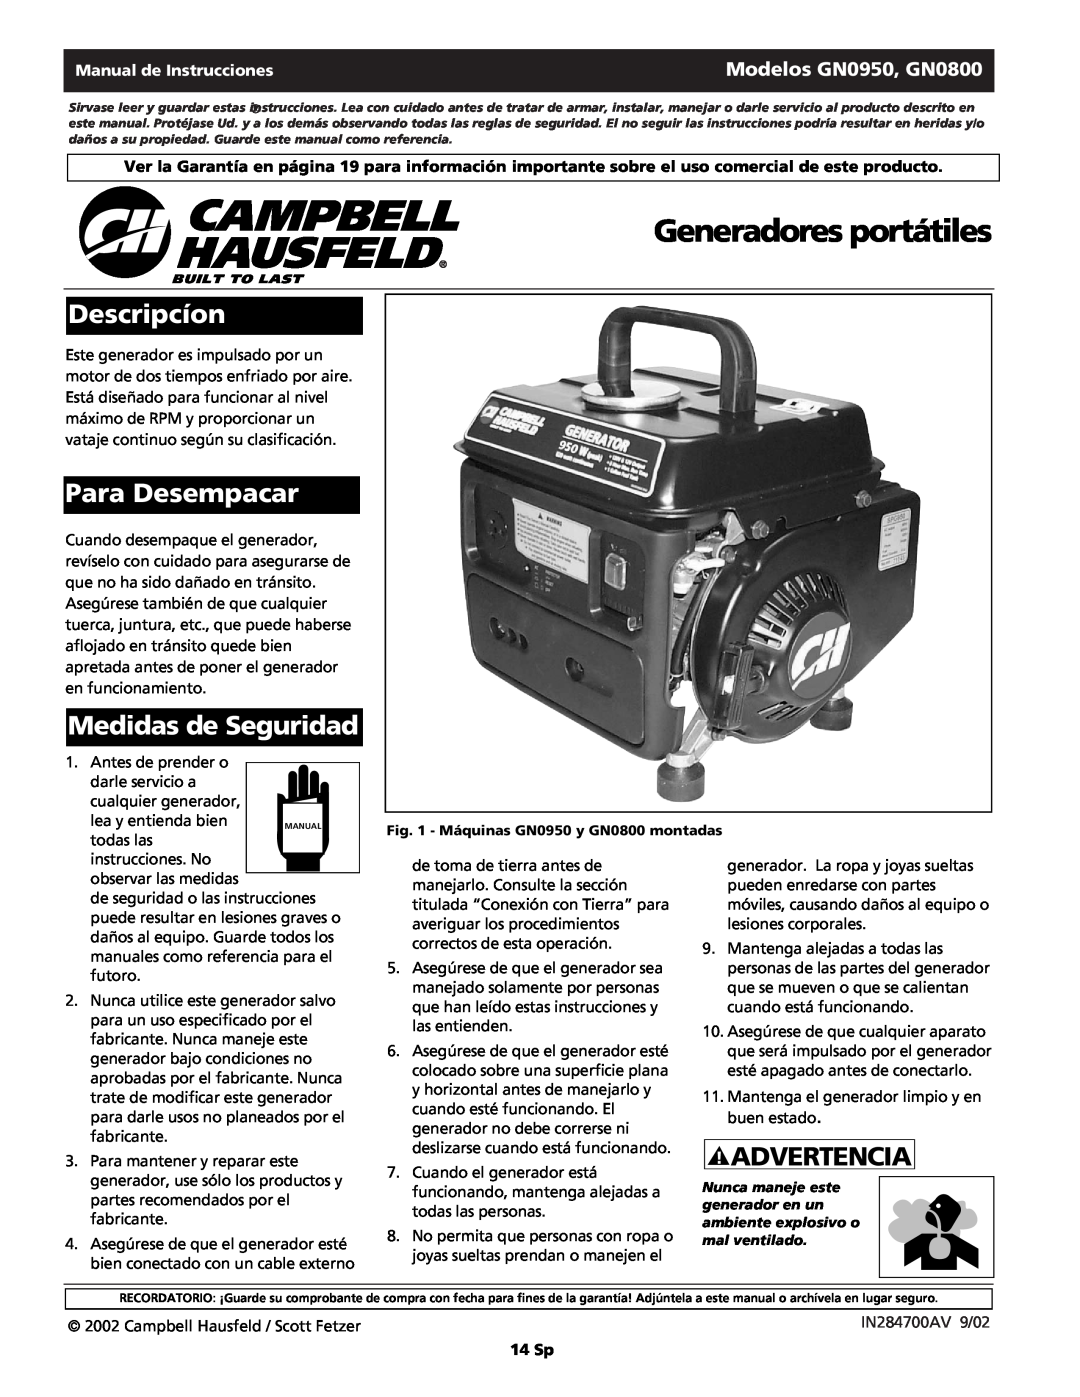 Campbell Hausfeld GN0950, GN0800 Generadores portátiles, Descripcíon, Para Desempacar, Medidas de Seguridad, Advertencia 